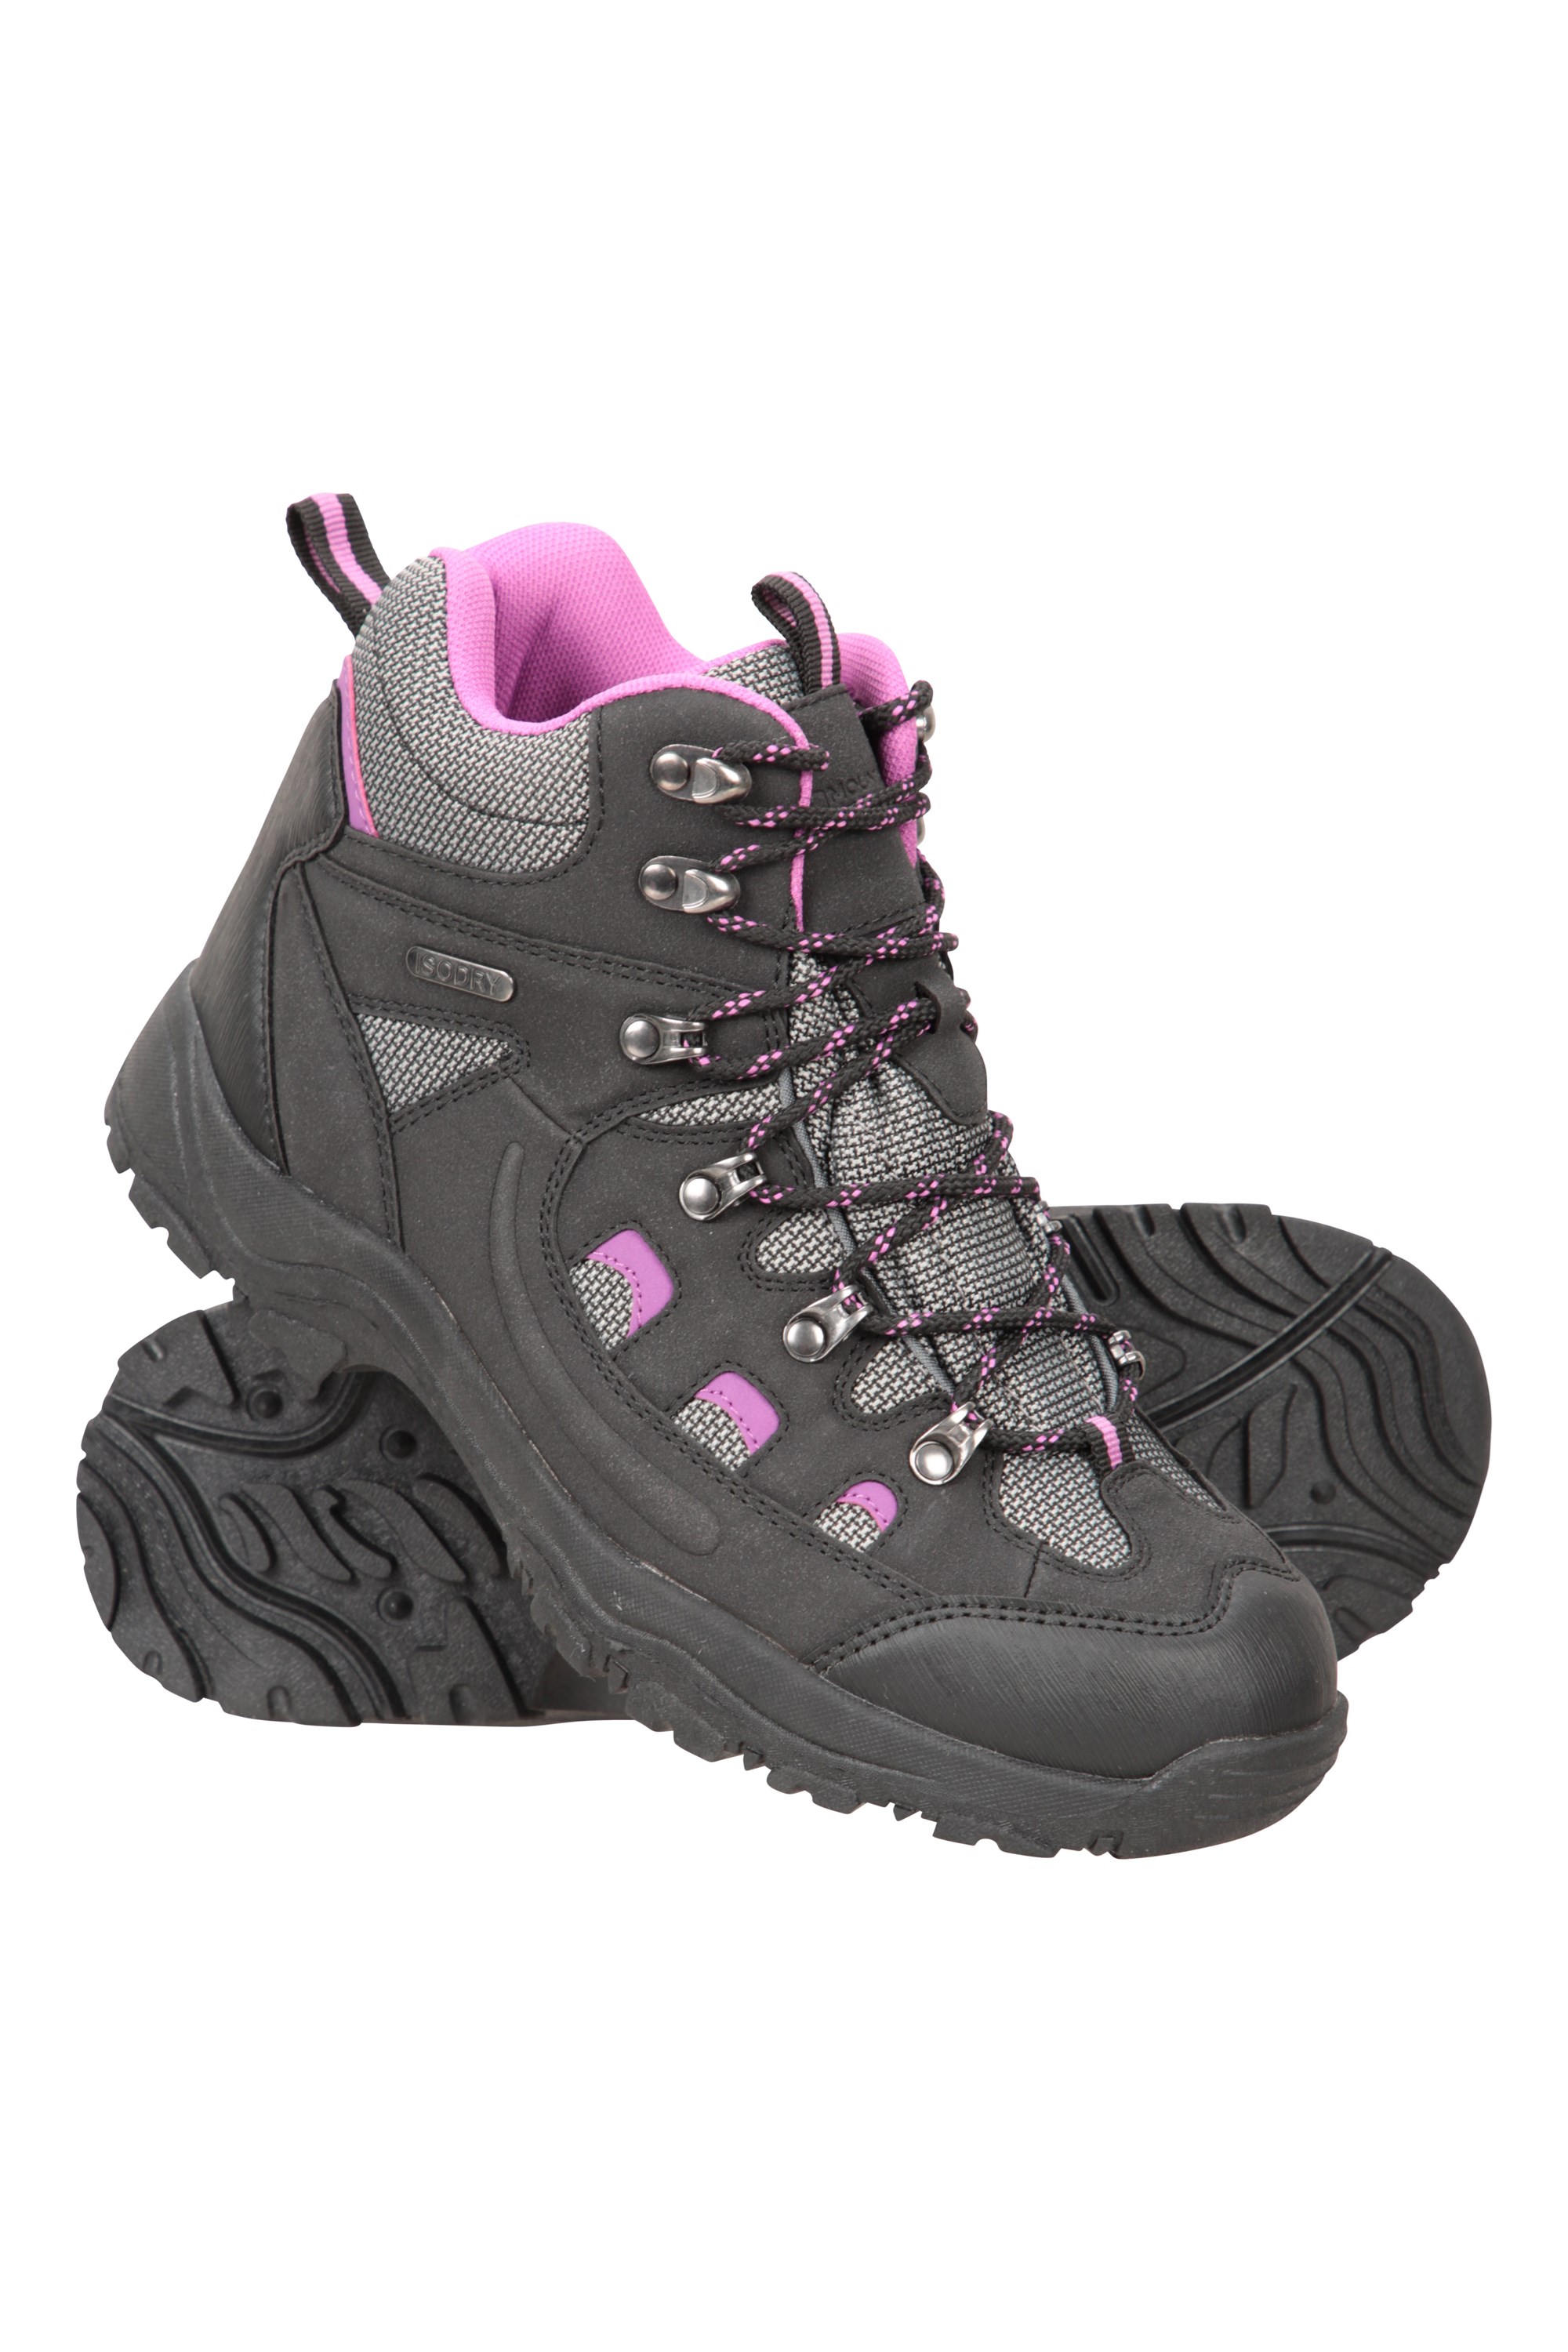 Adventurer Womens Waterproof Boots - Black